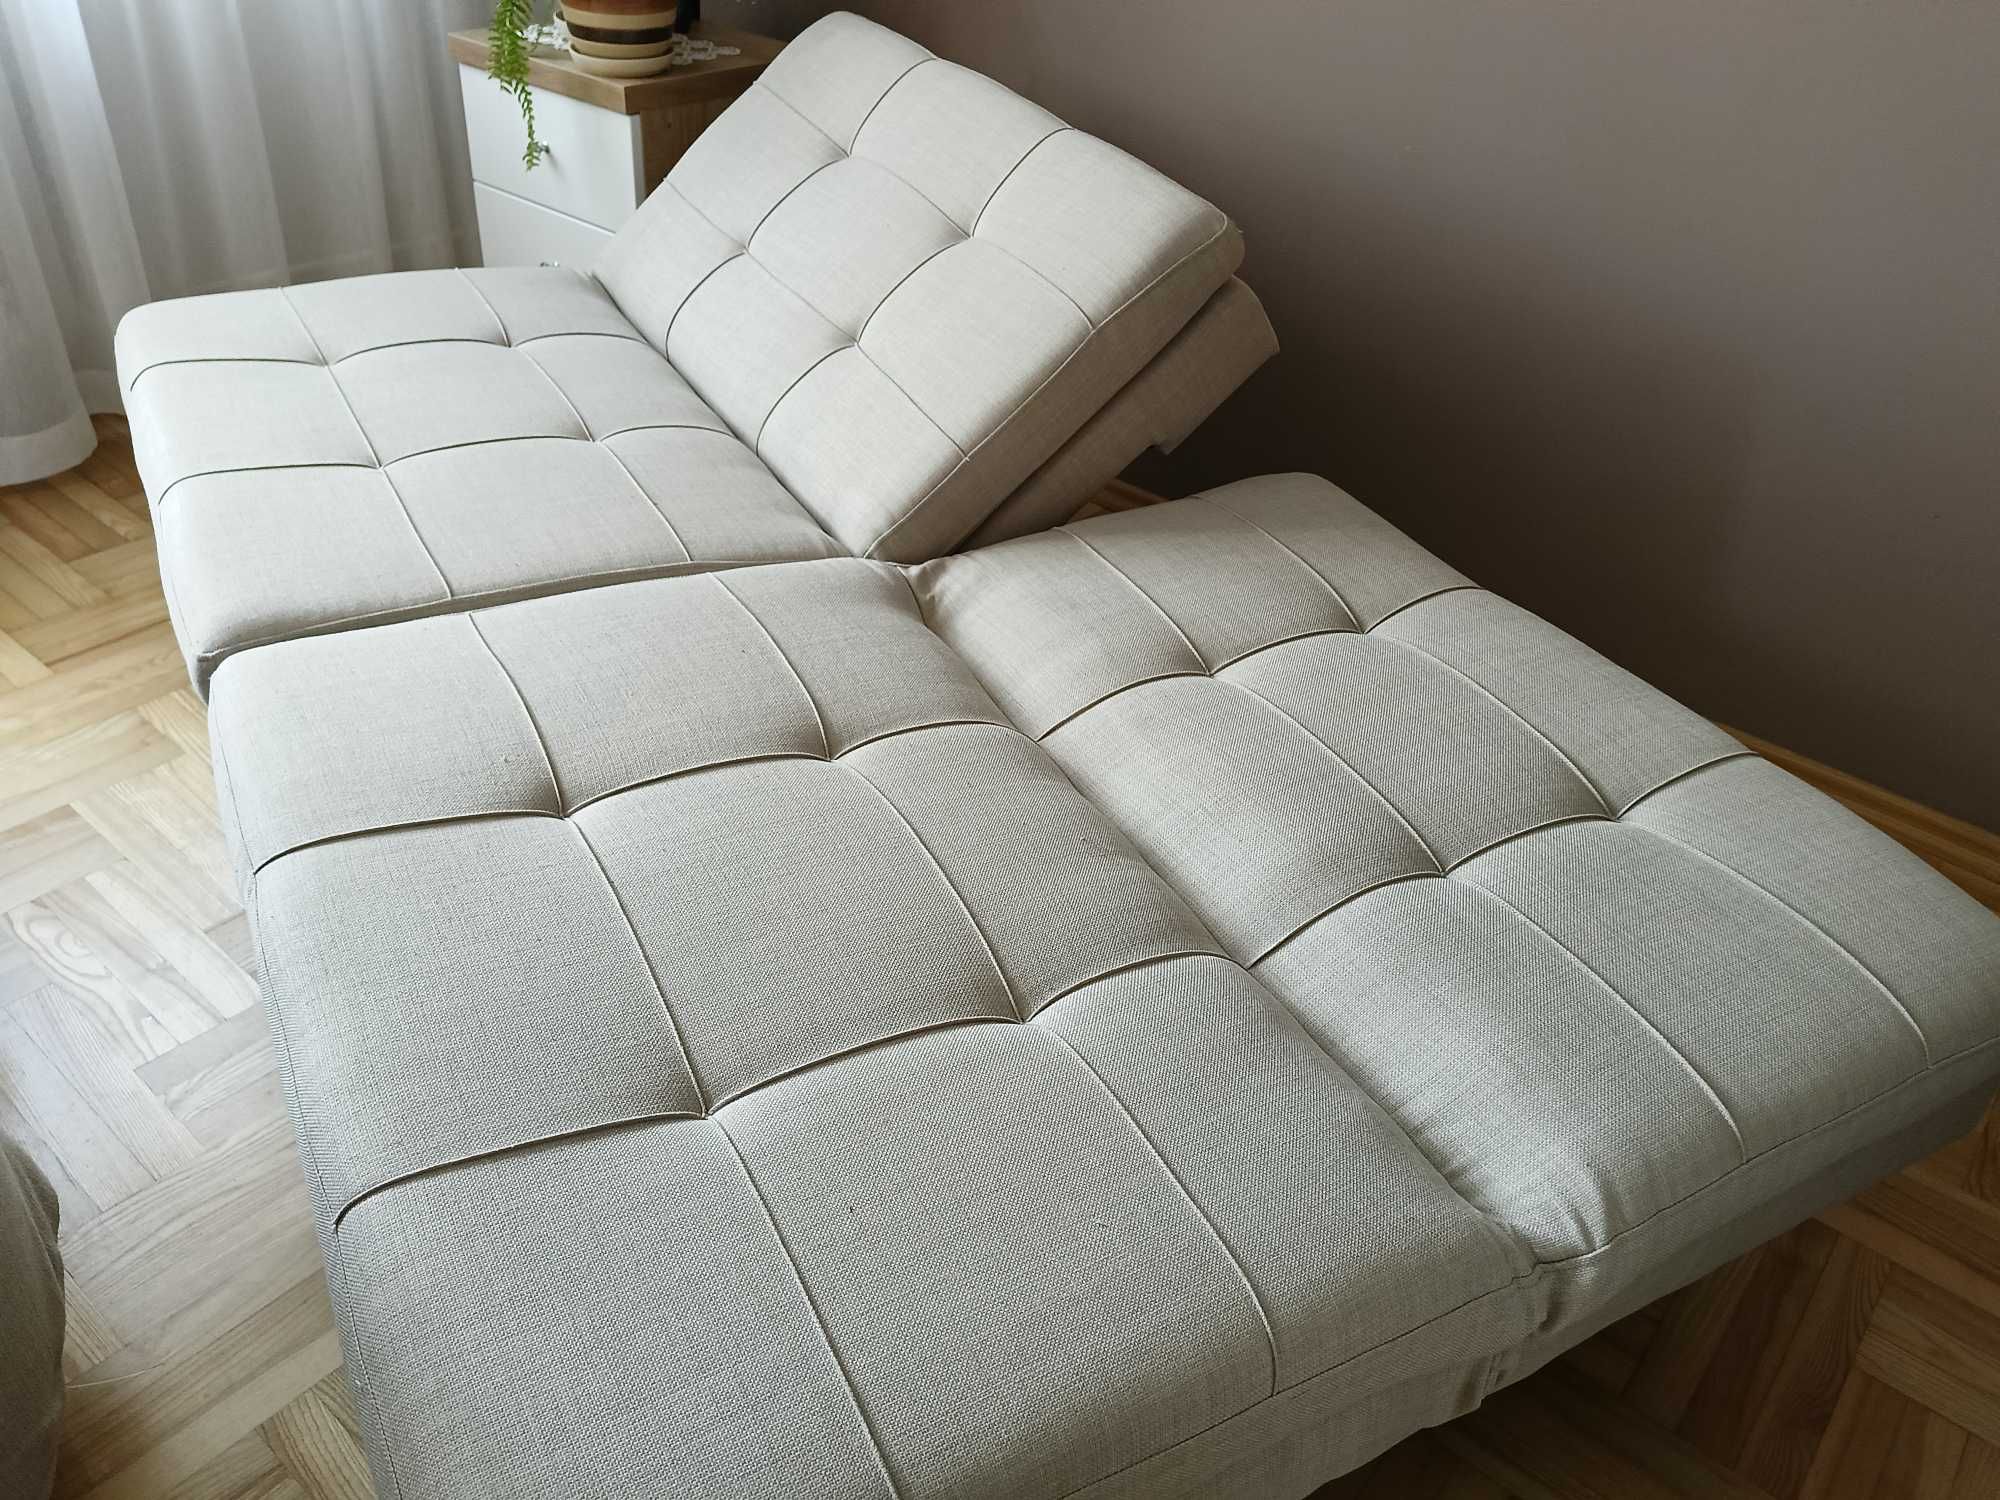 Zestaw mebli sofa i fotele